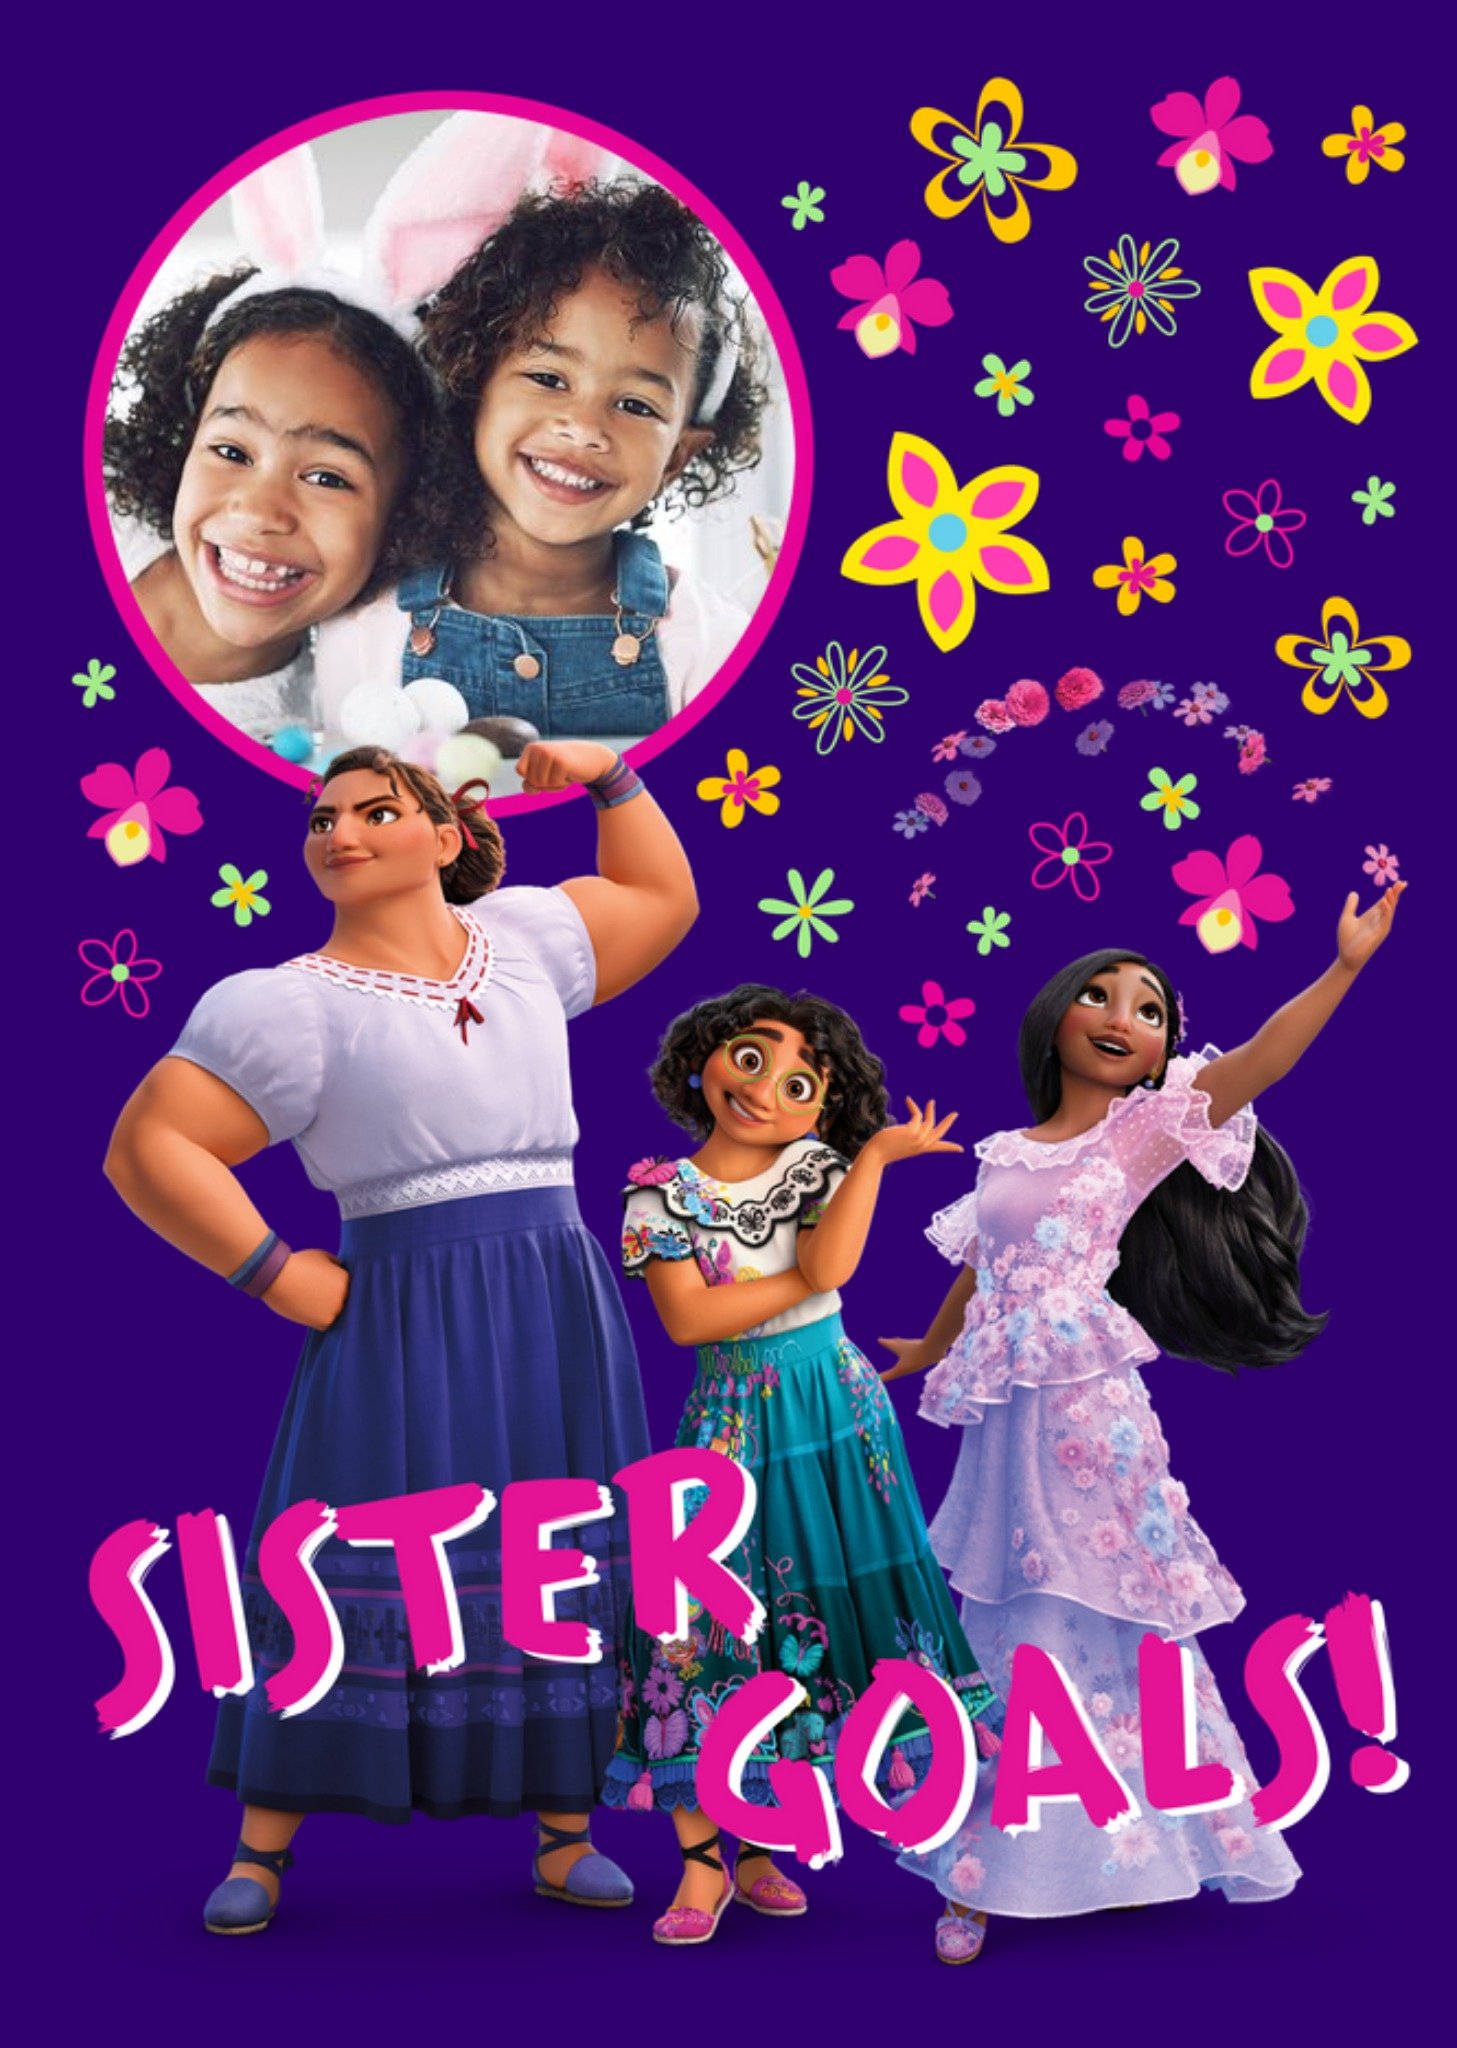 Disney Ecanto Sister Goals Photo Upload Card Ecard